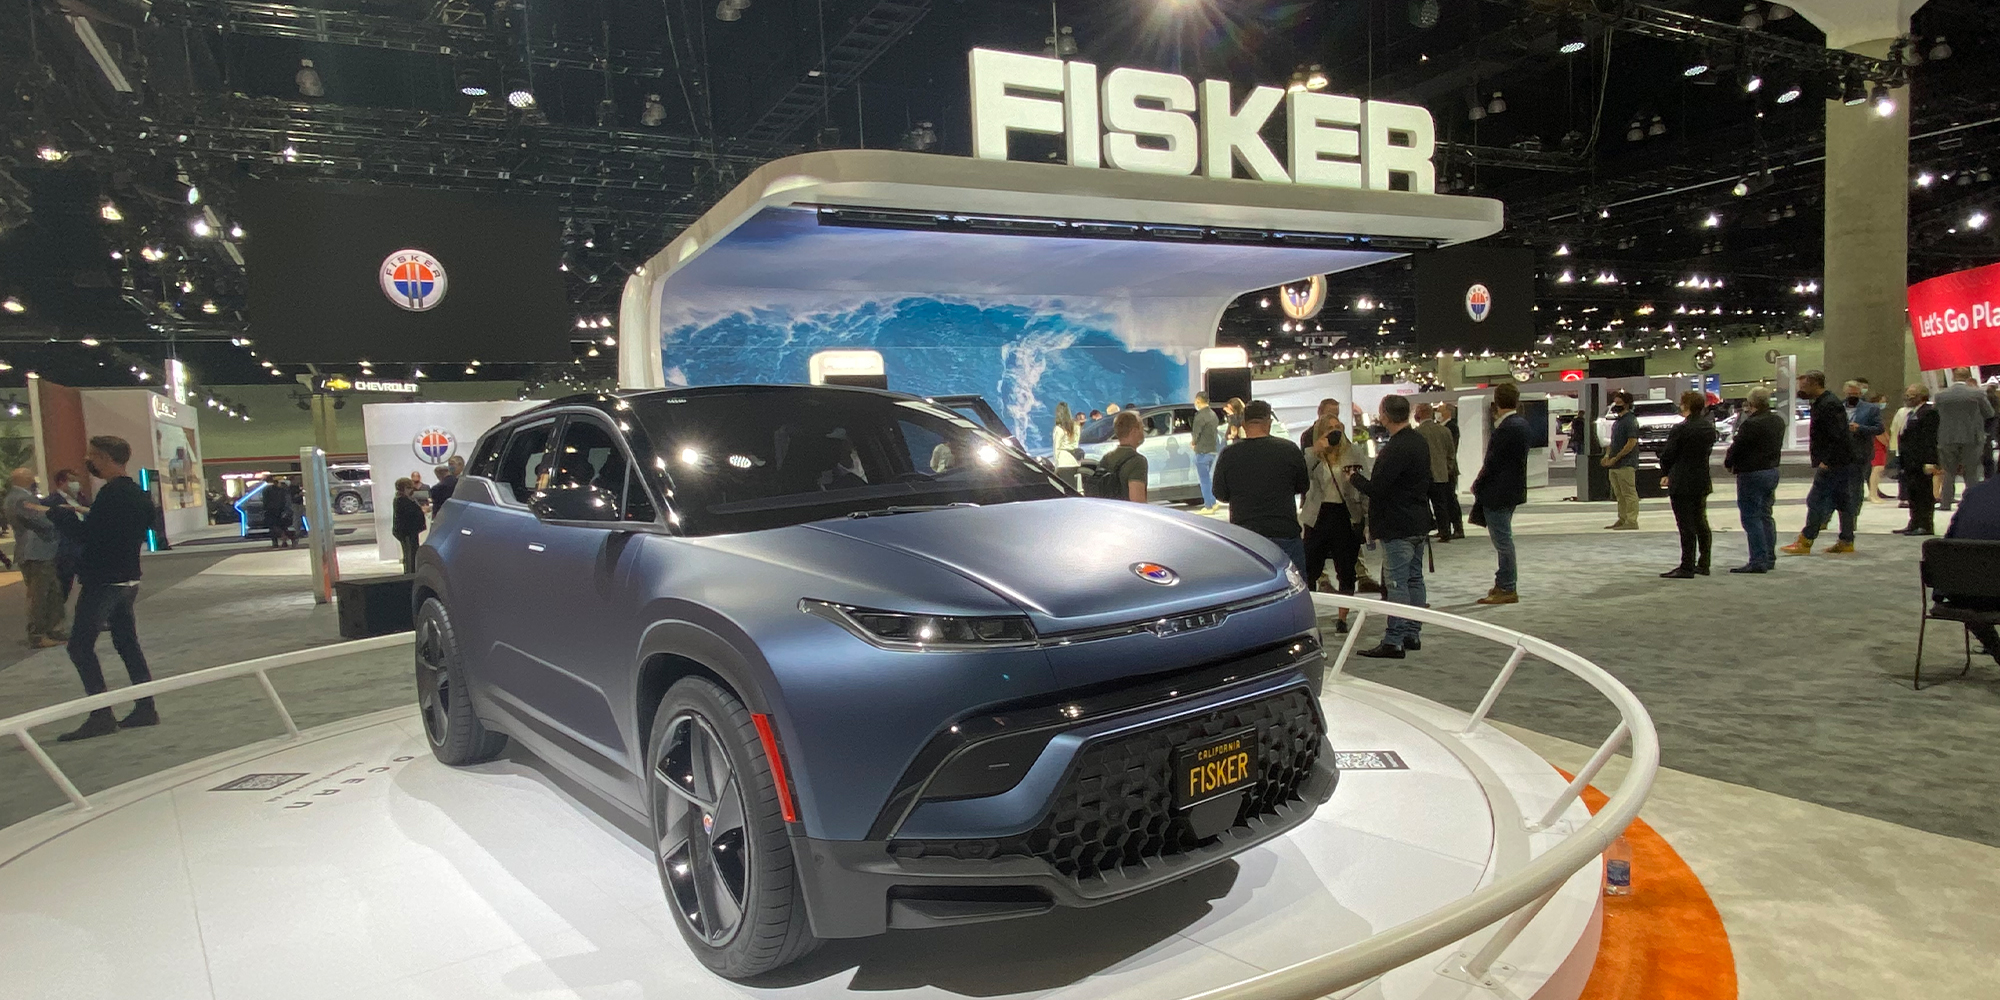 Fisker Ocean LA Auto Show Display